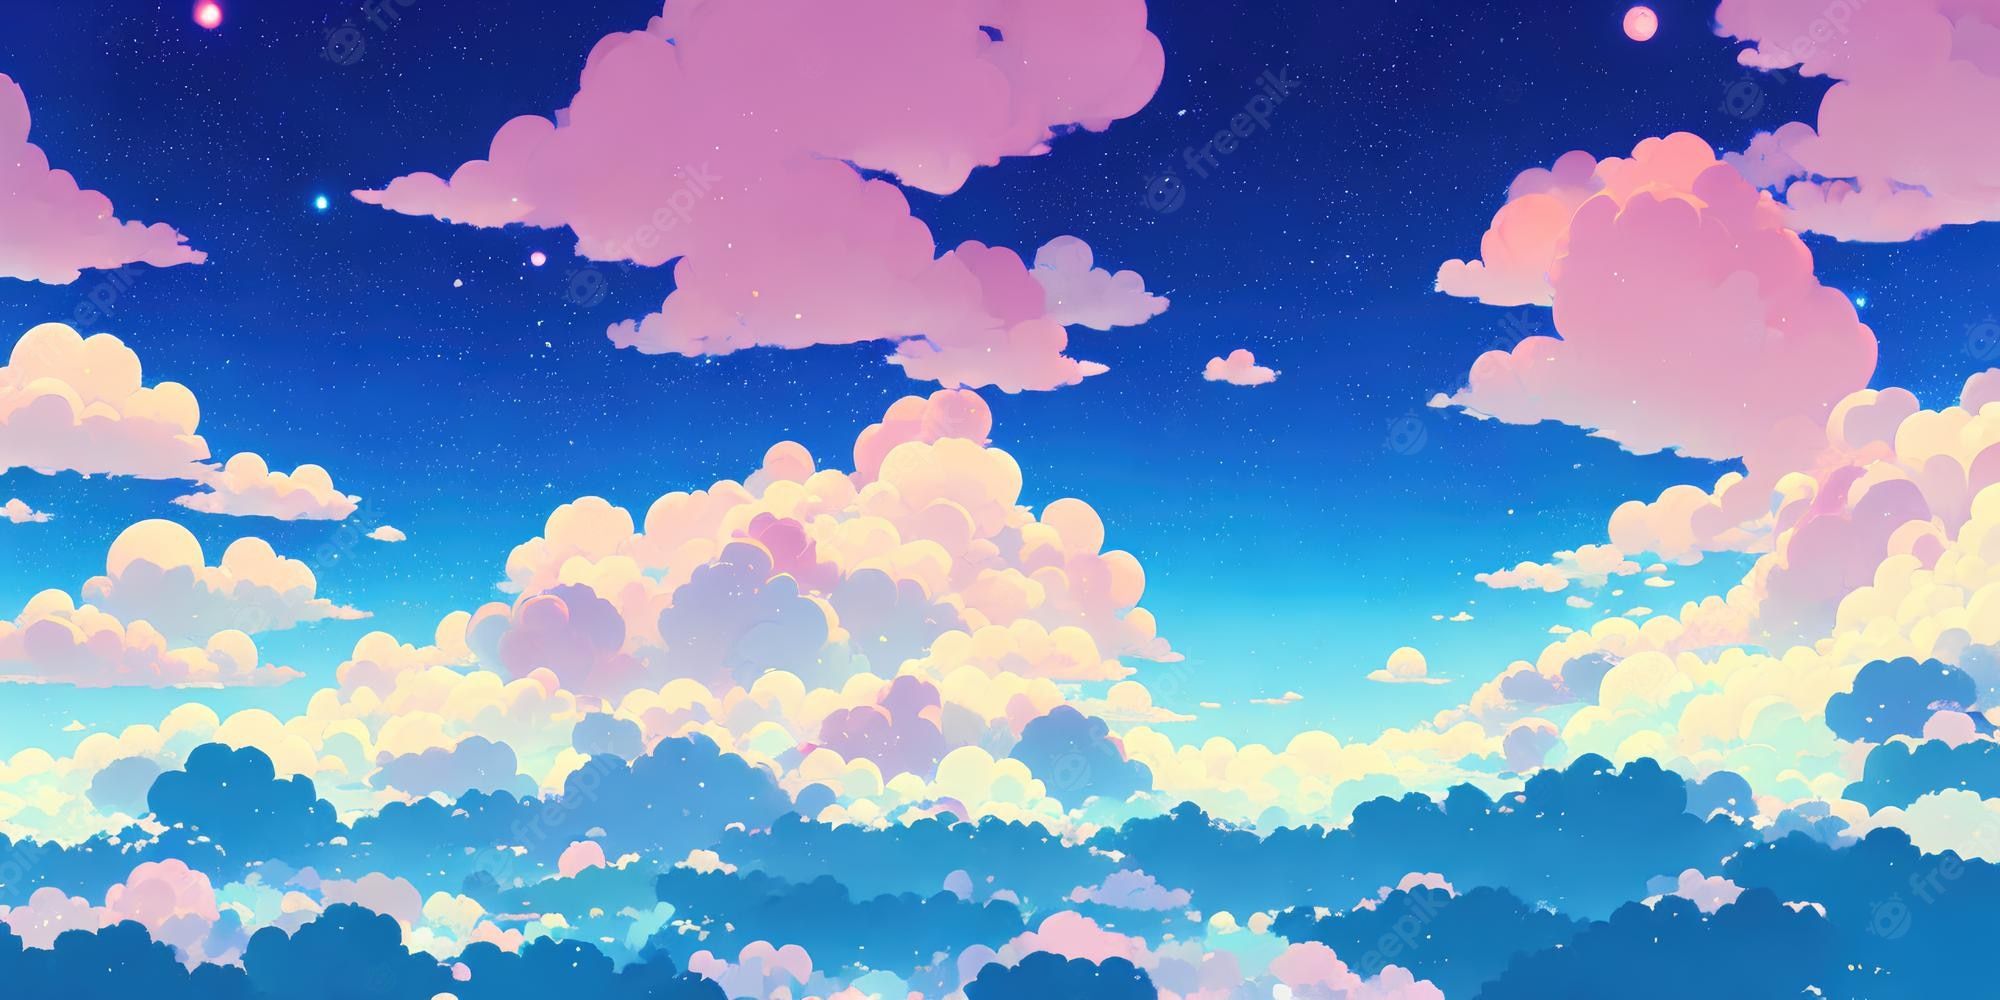 Anime Sky Image